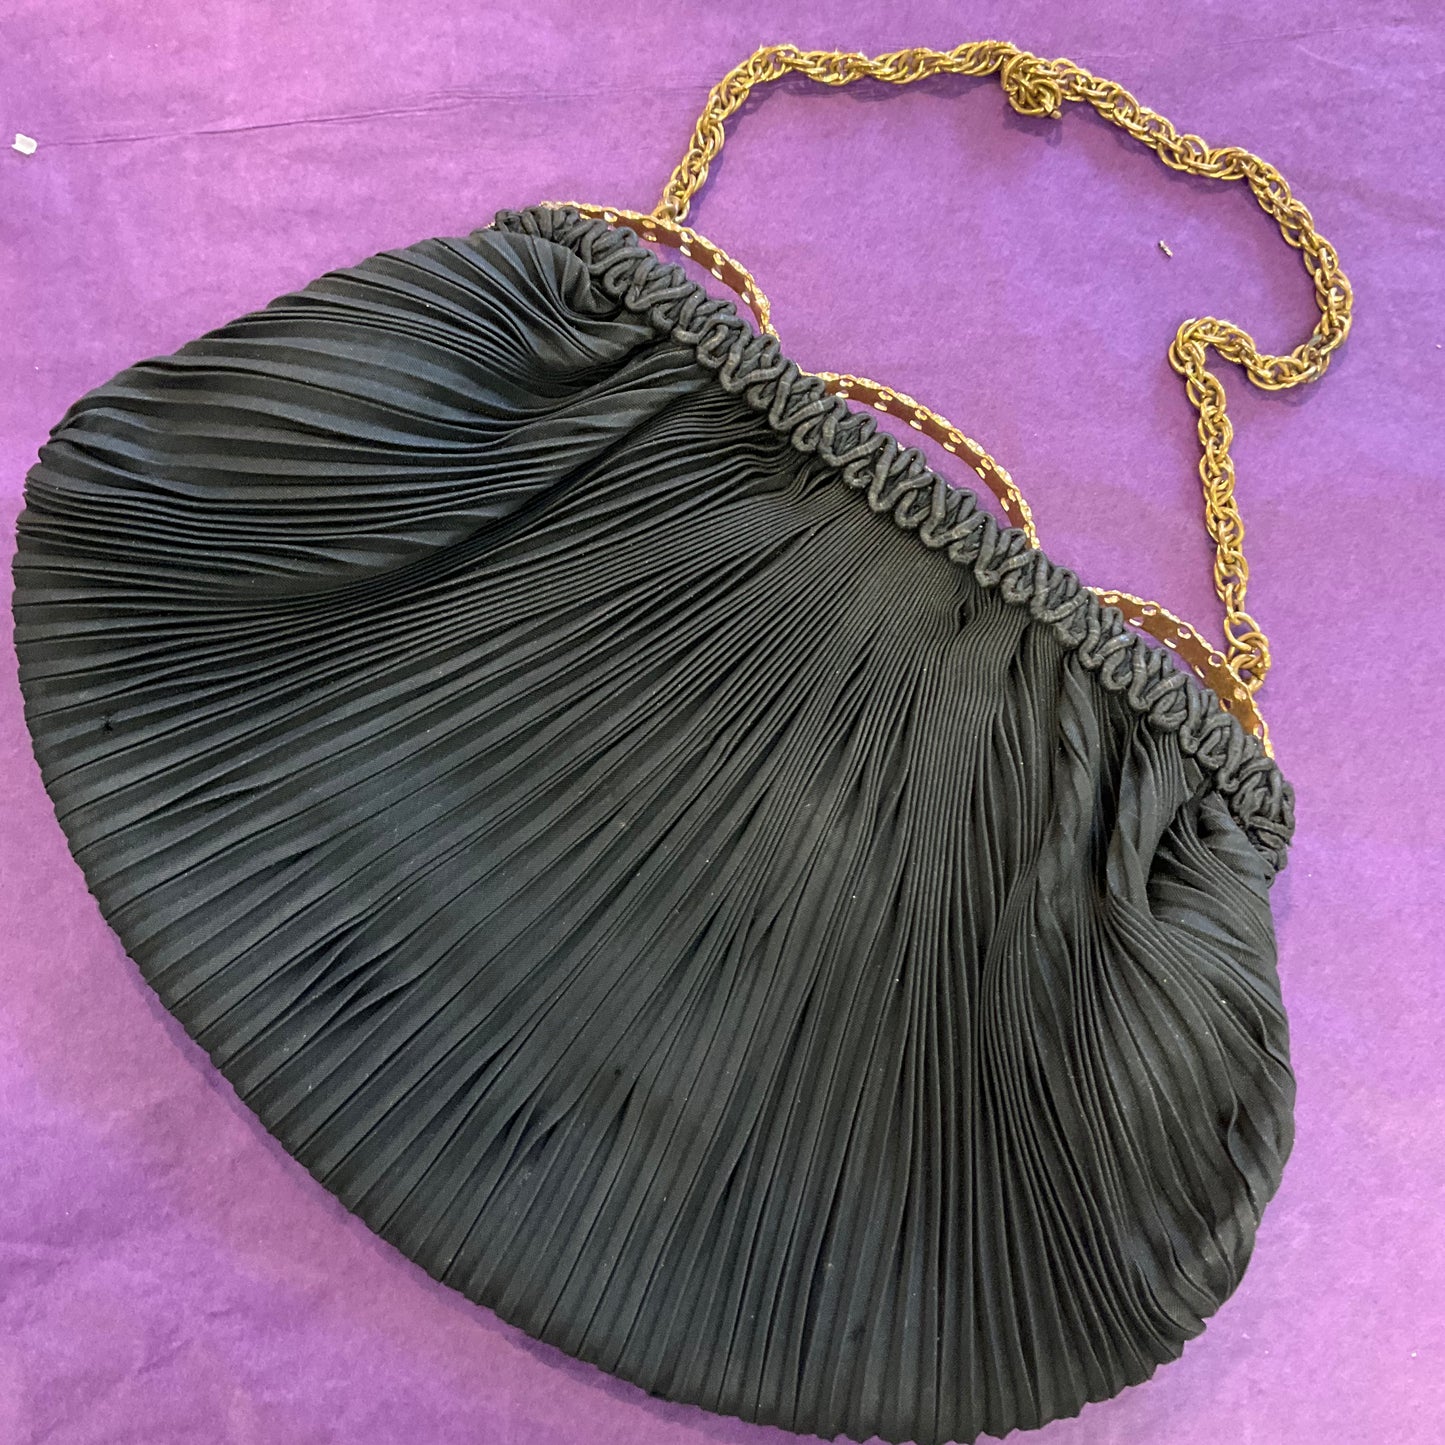 Antique Art Deco Black silk evening bag with ornate rhinestone studded frame